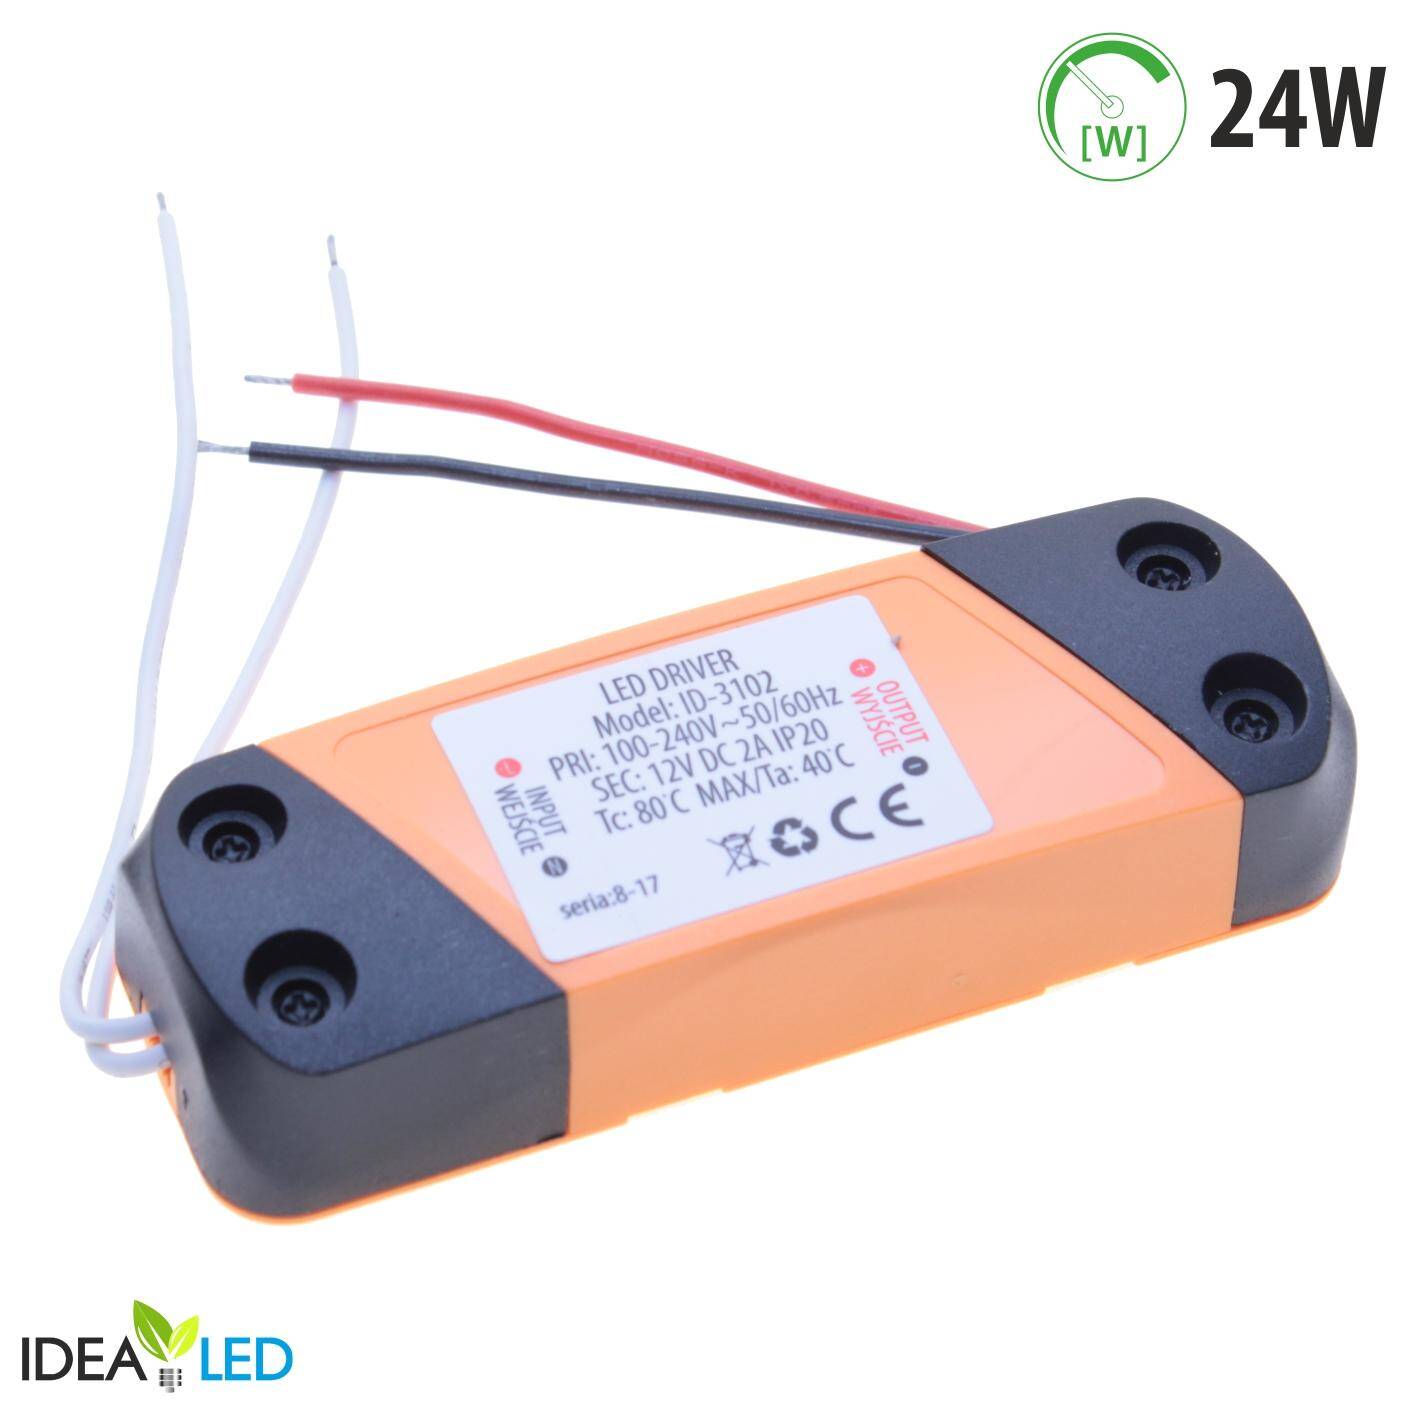 LED Power Supply 12V 2A 24W